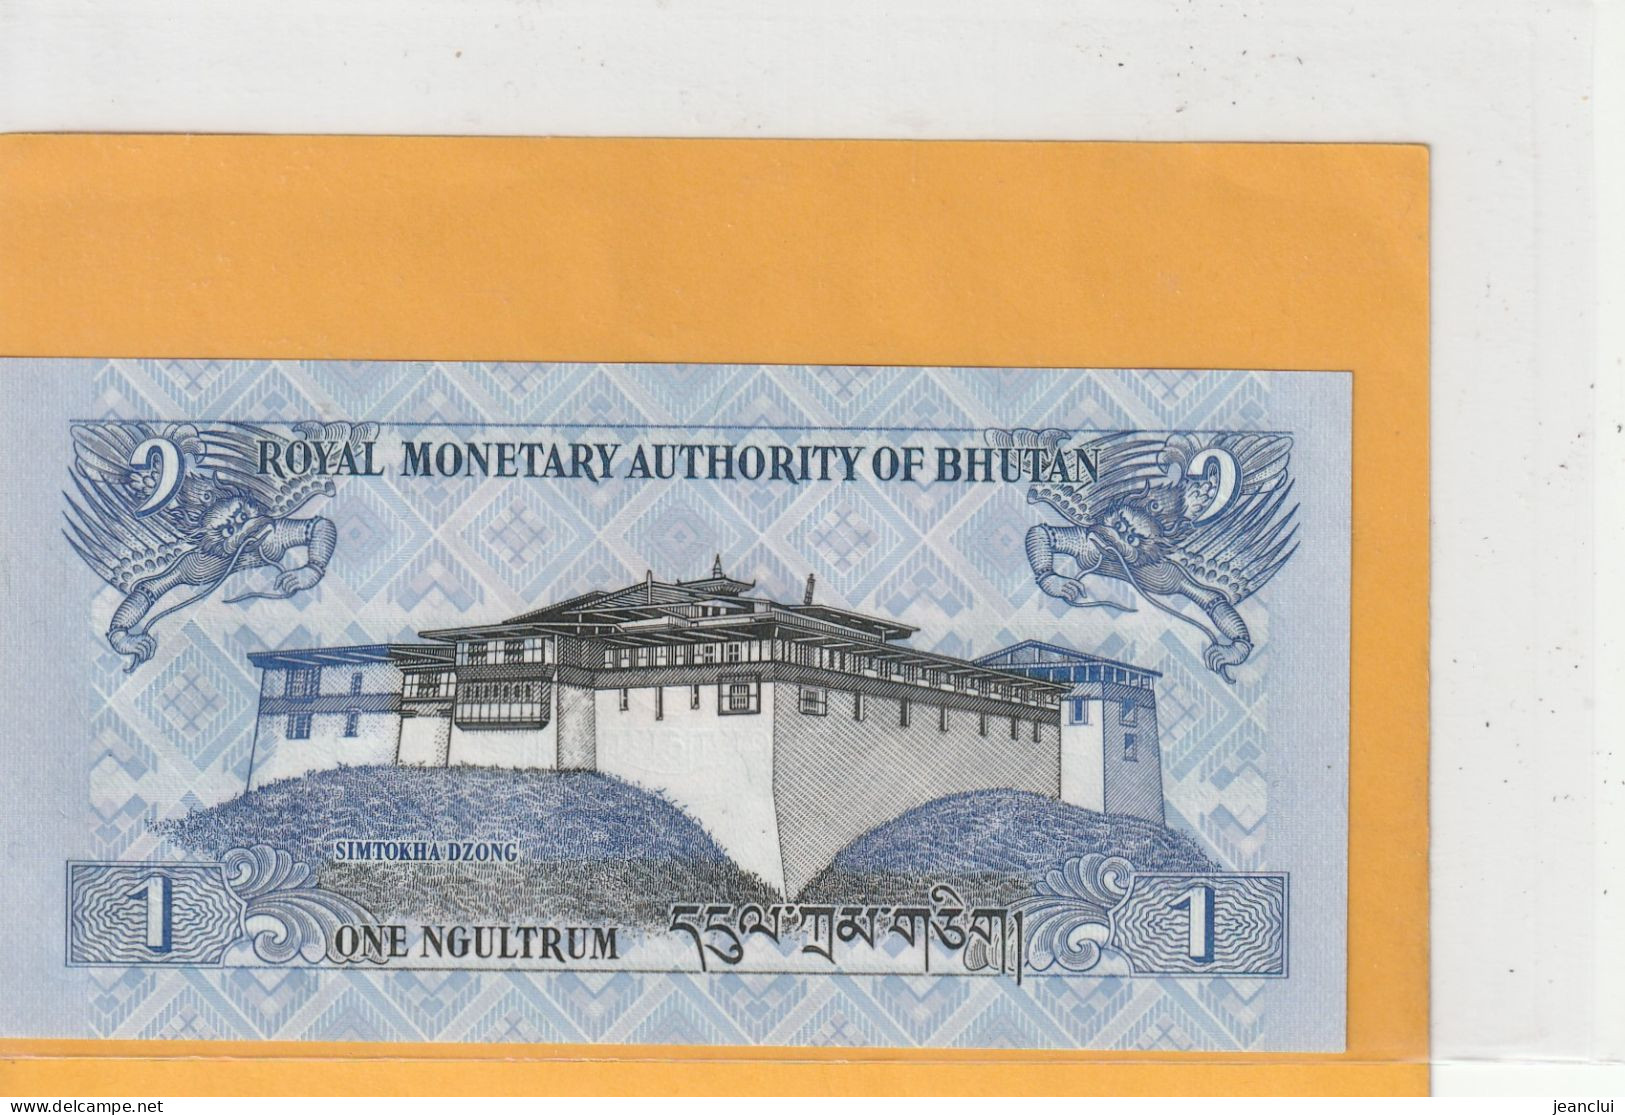 ROYAL MONETARY AUTHORITY OF BHUTAN .  1 NGULTRUM  . 2013   . N°  I 11659662  .  2 SCANNES  .  BILLET ETAT LUXE - Bhutan